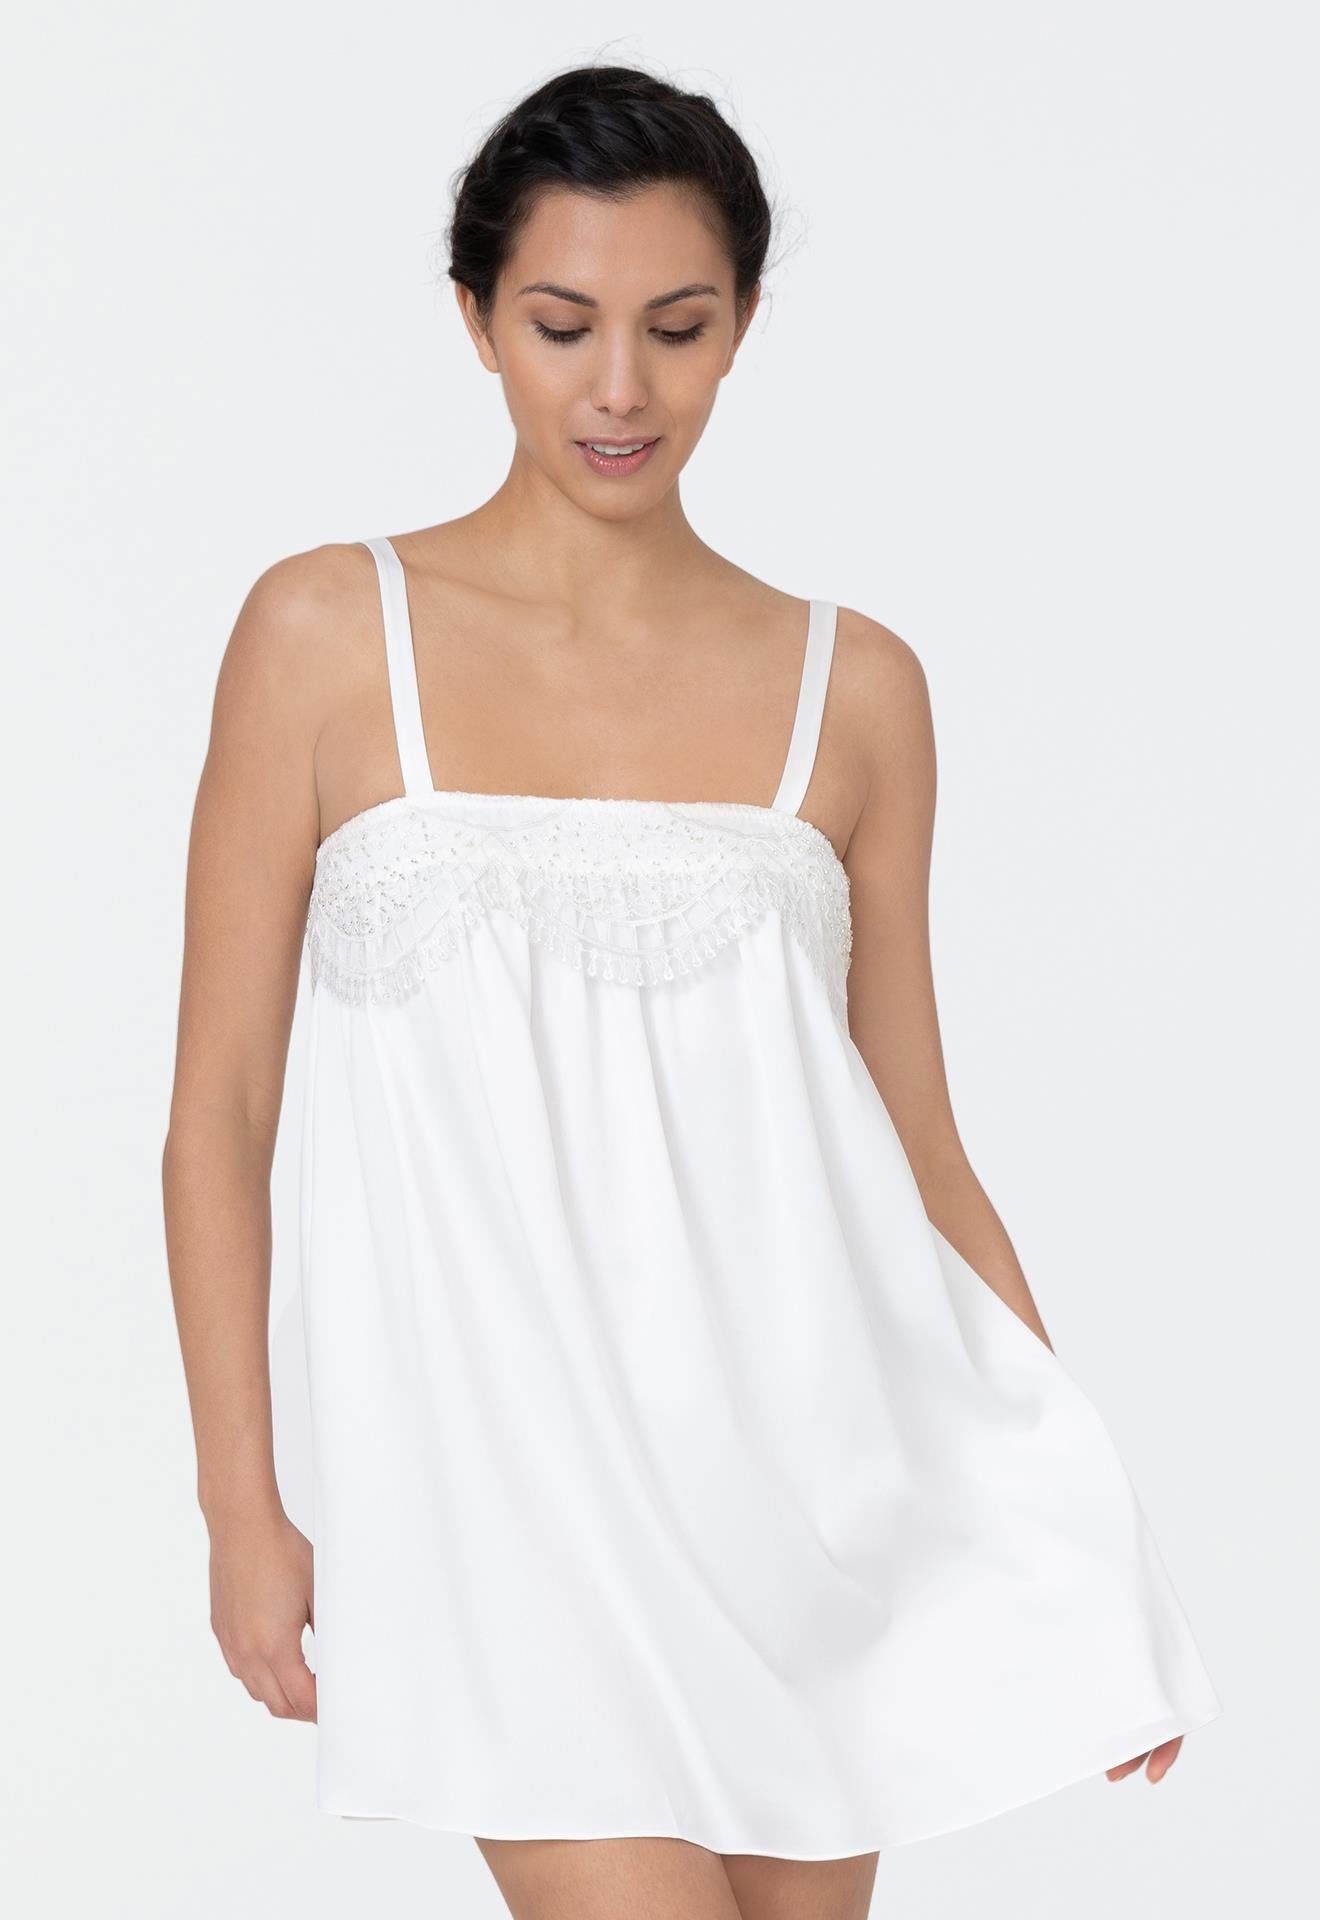 Kayanna Flannel Nightgown – Vicanie's